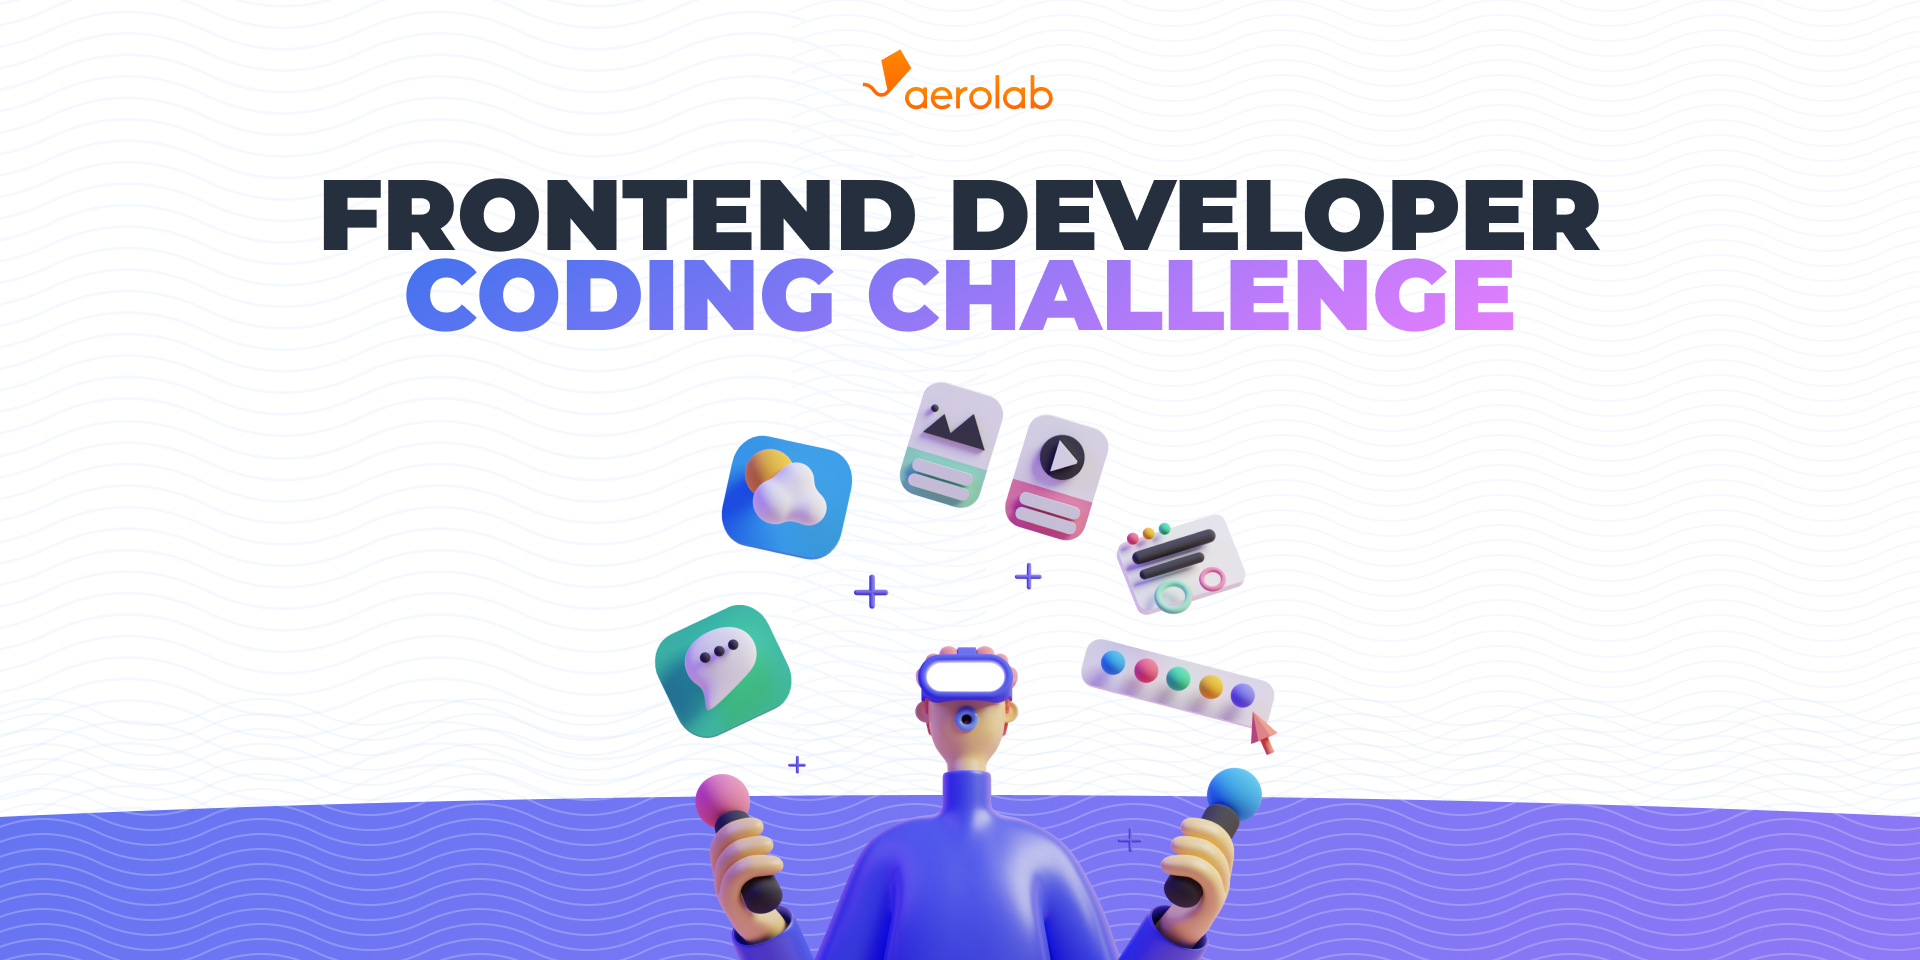 Aerolab's Frontend Developer coding challenge